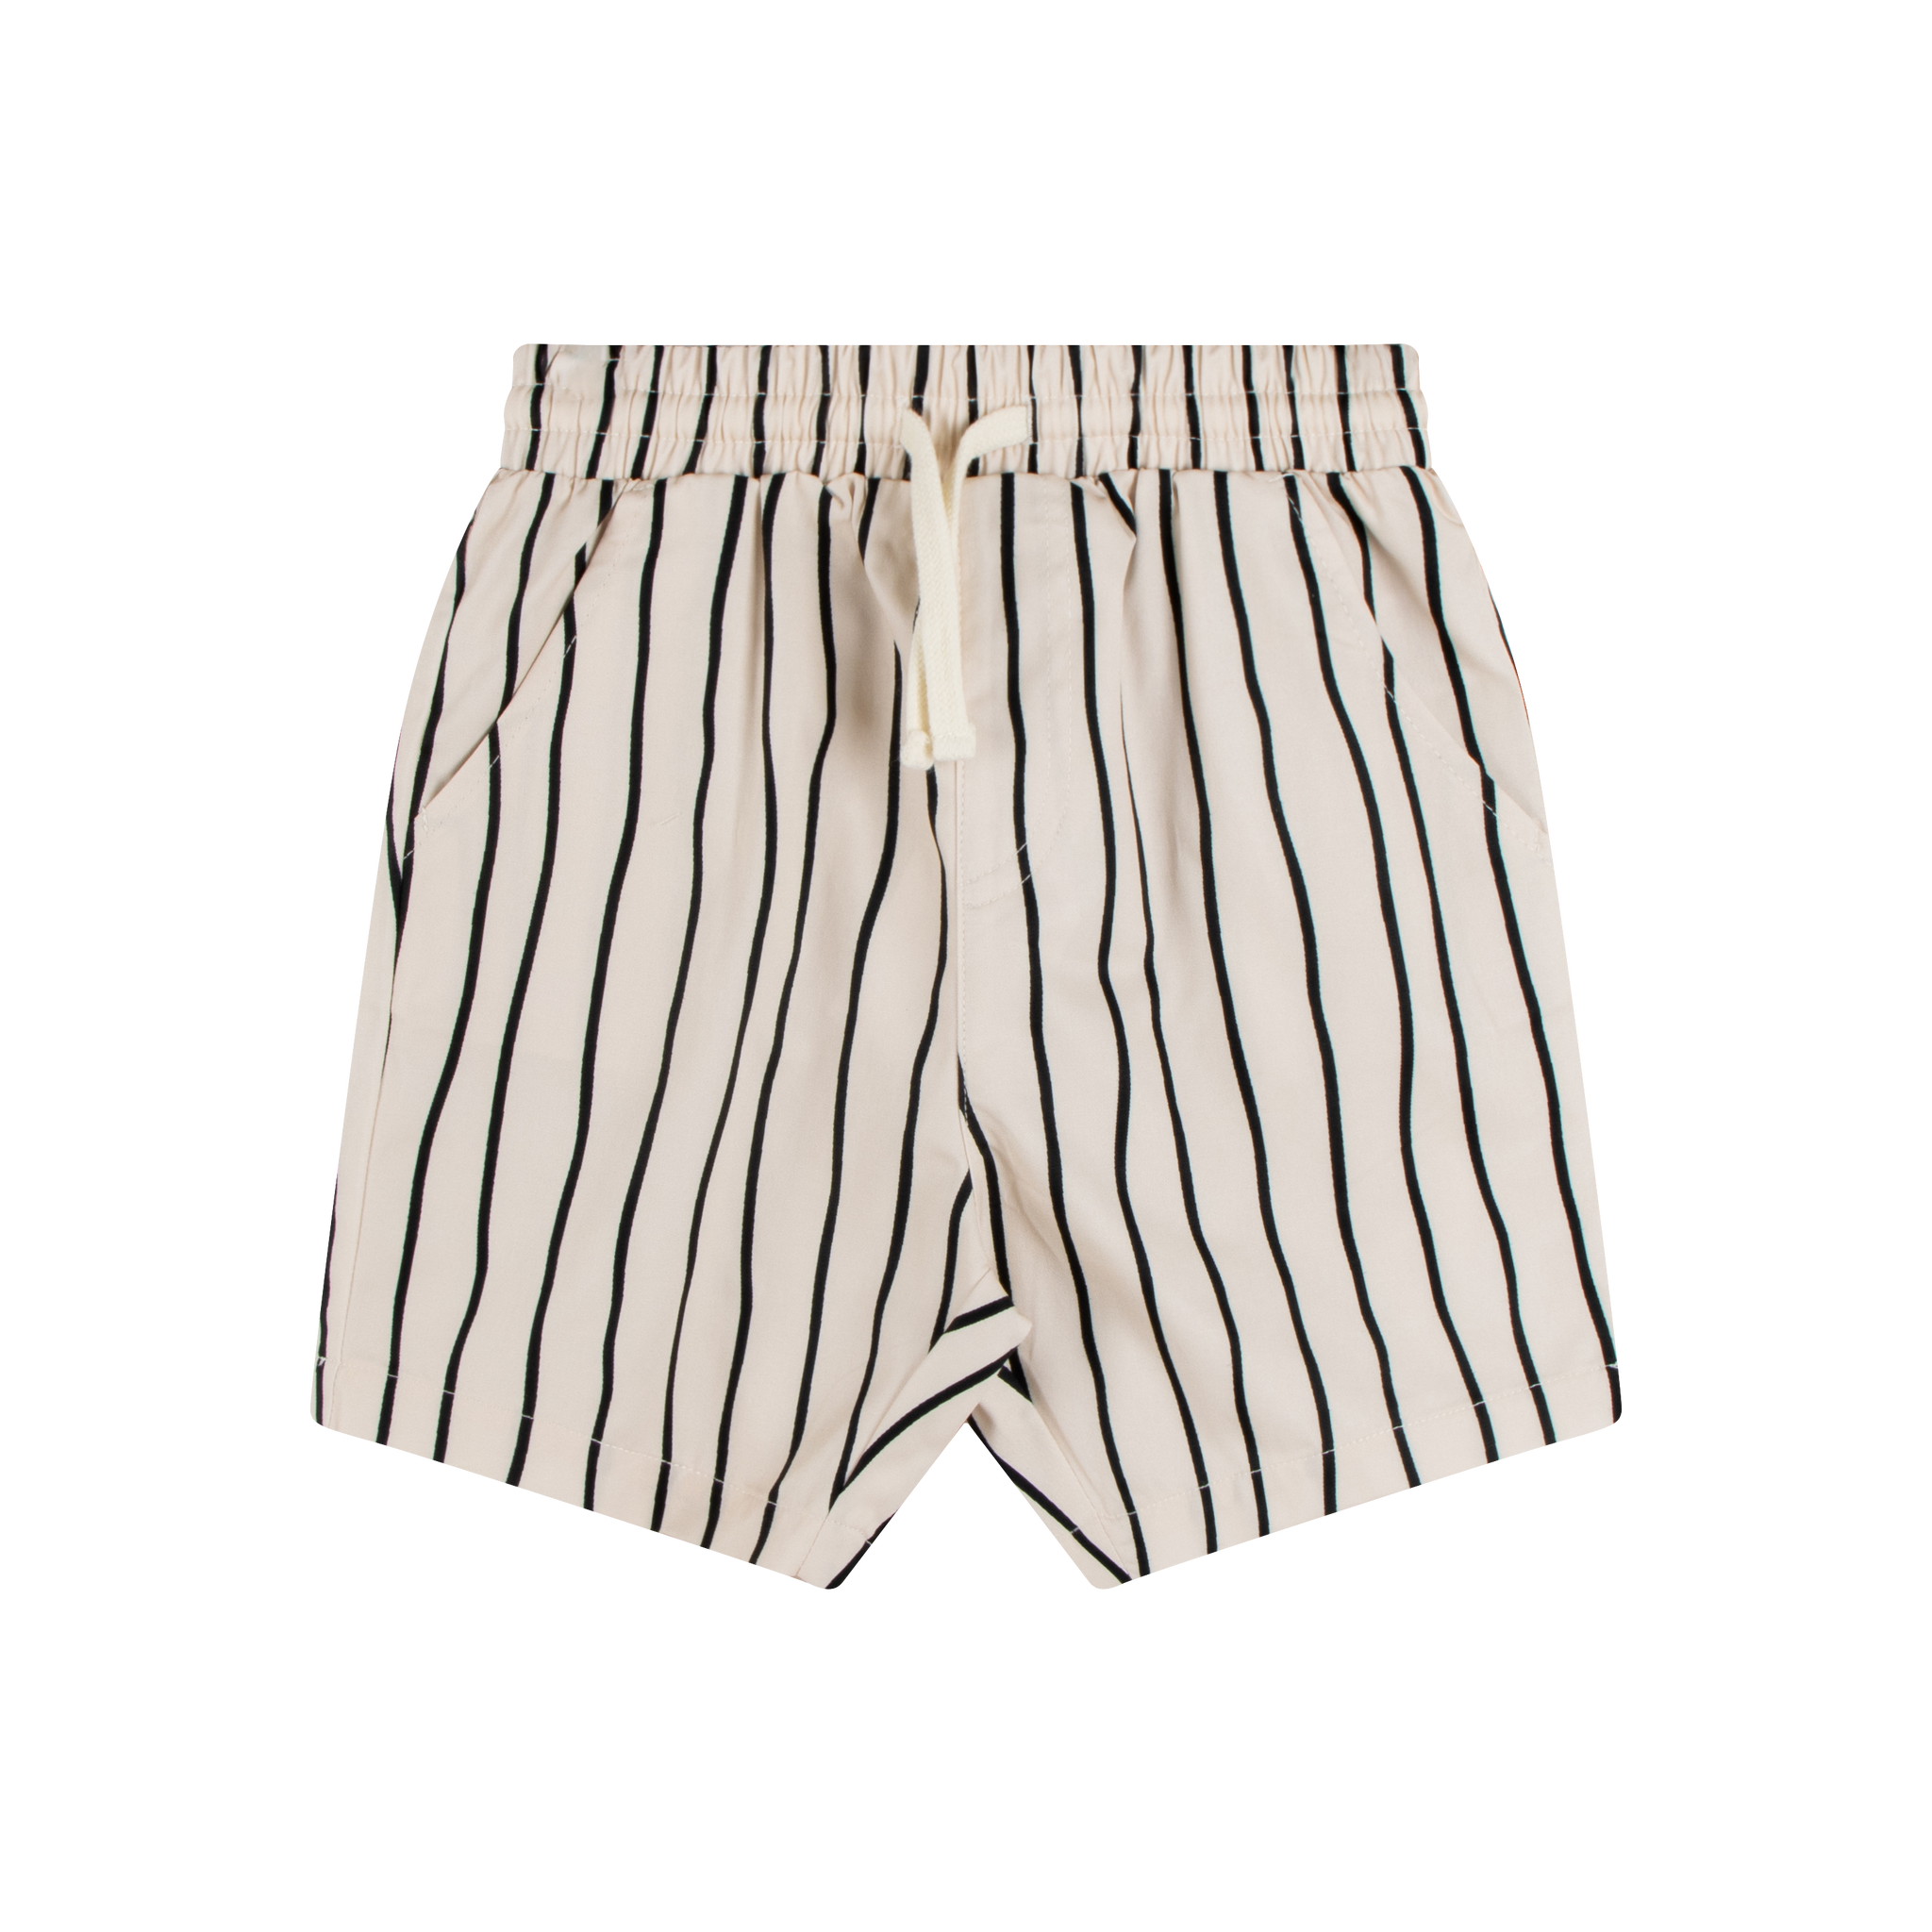 IMIN KIDS Knee Length Cotton Shorts Vertical Striped